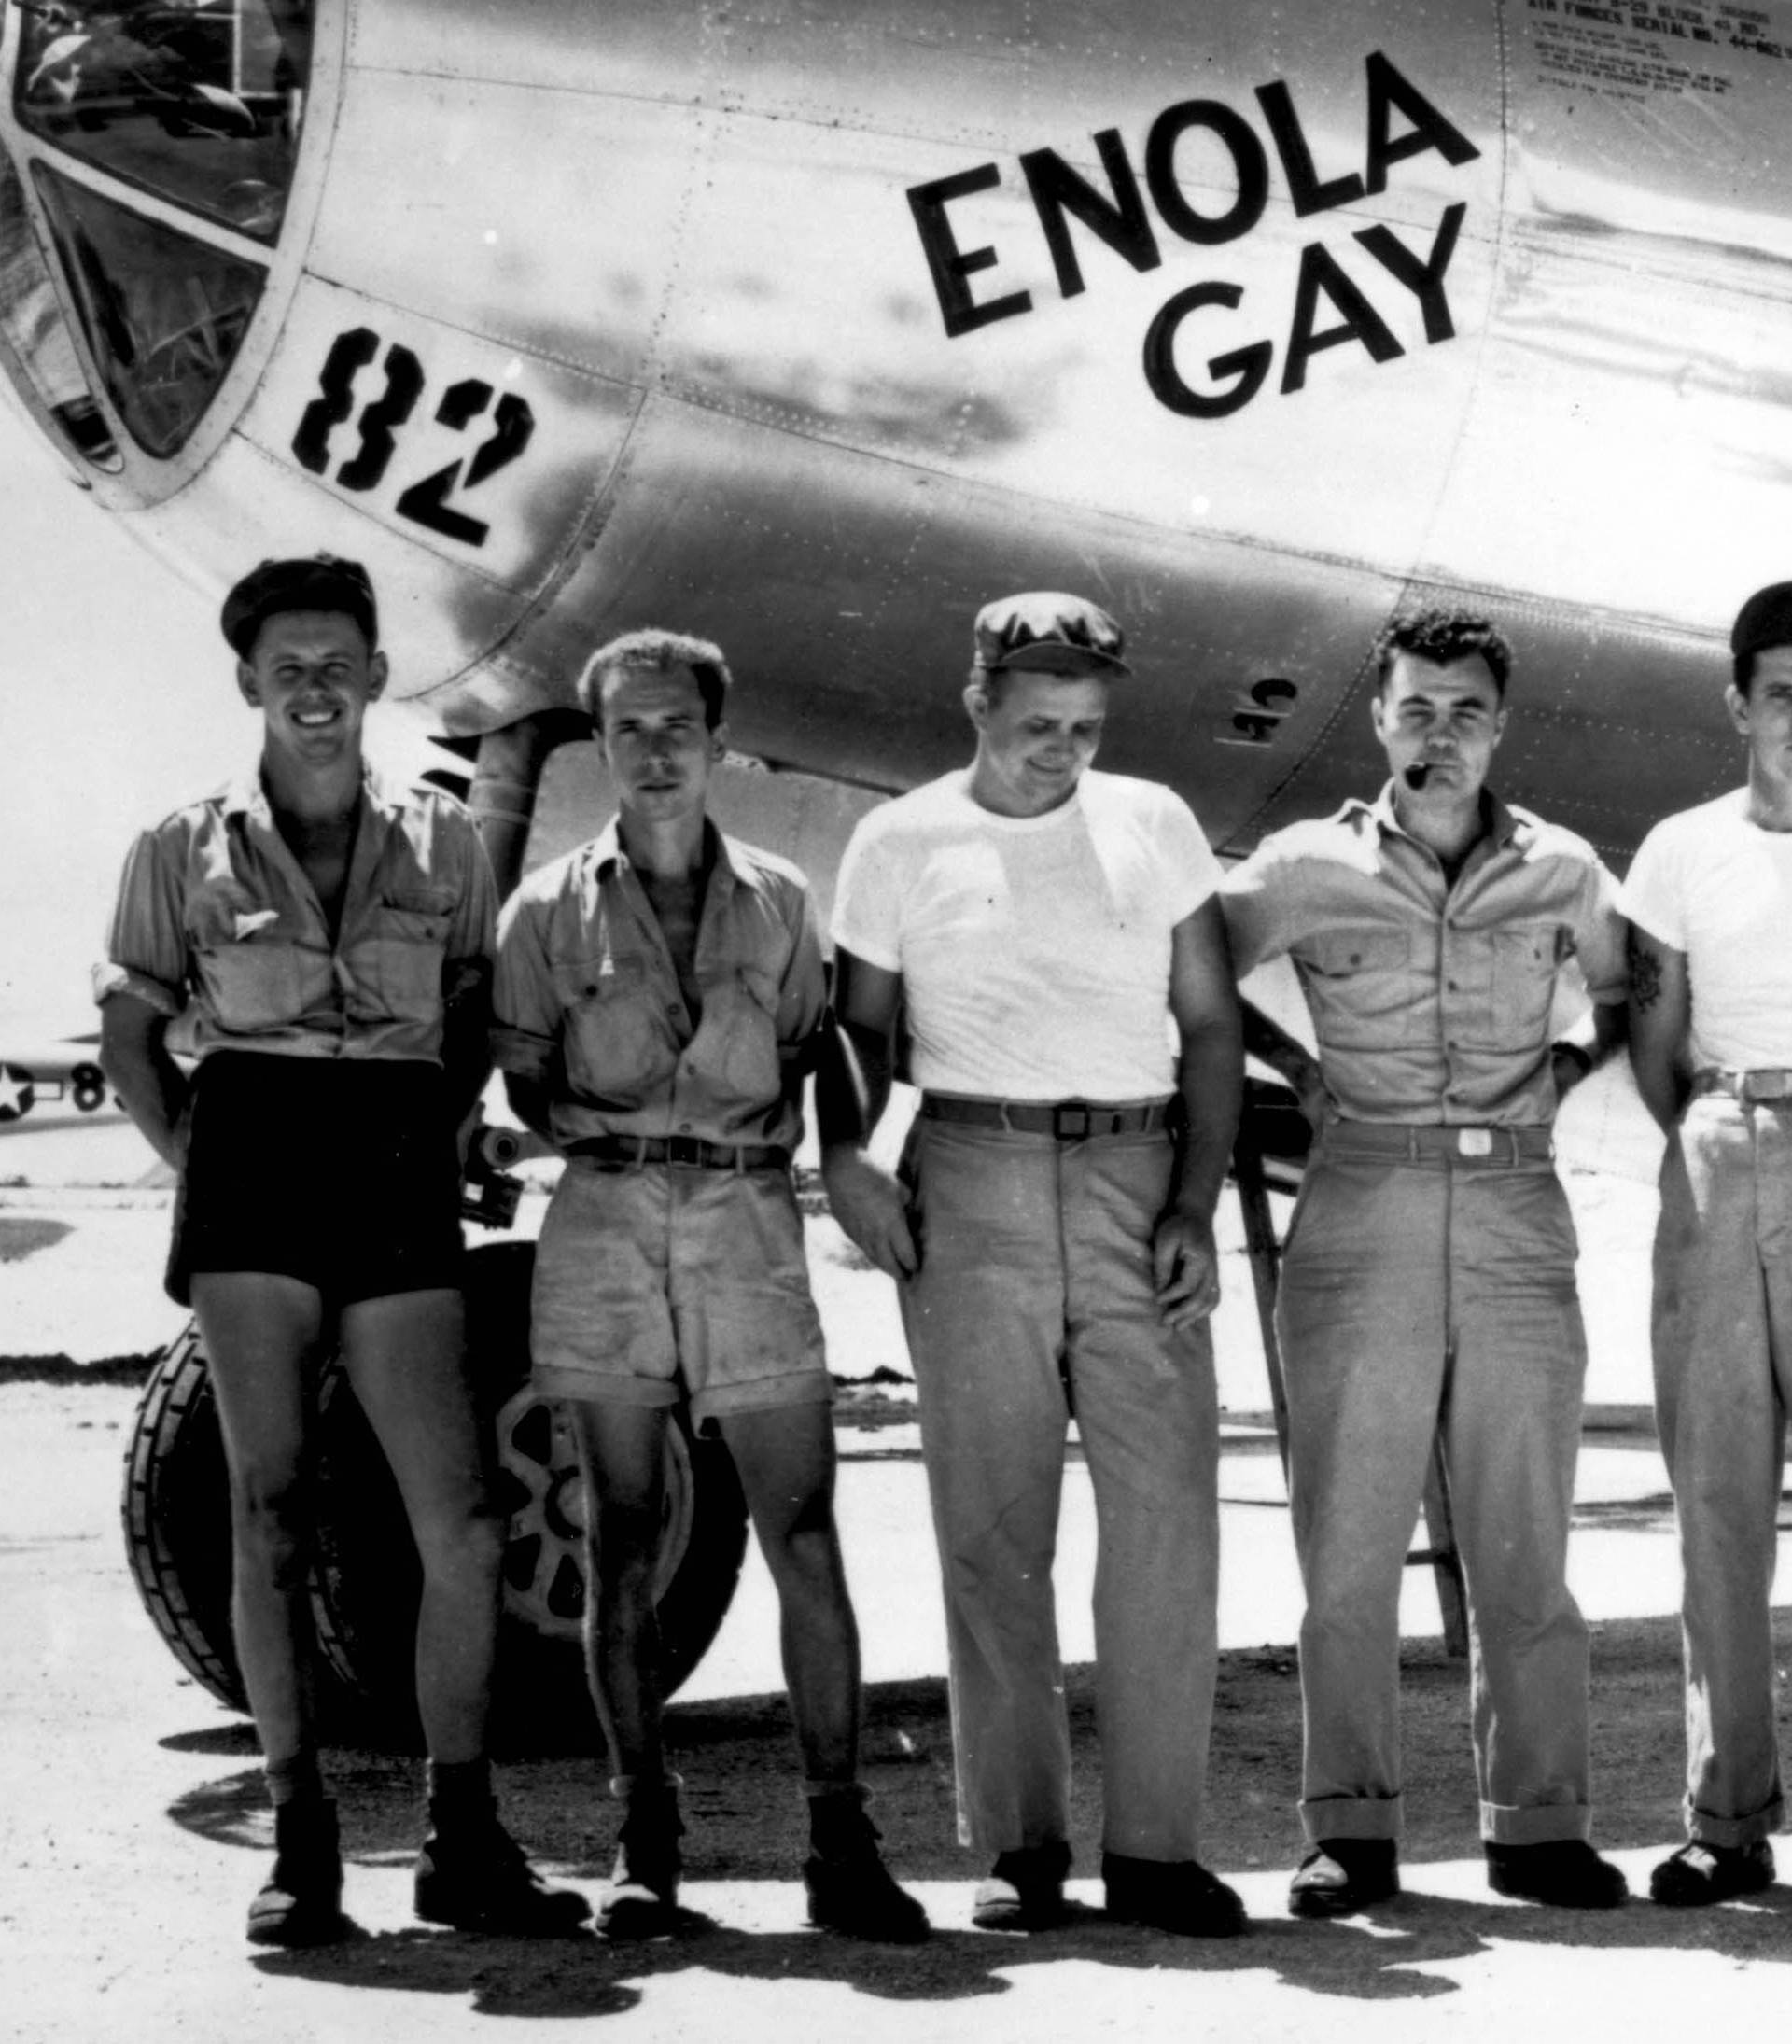 Enola Gay crew drops first atomic bomb on Hiroshima